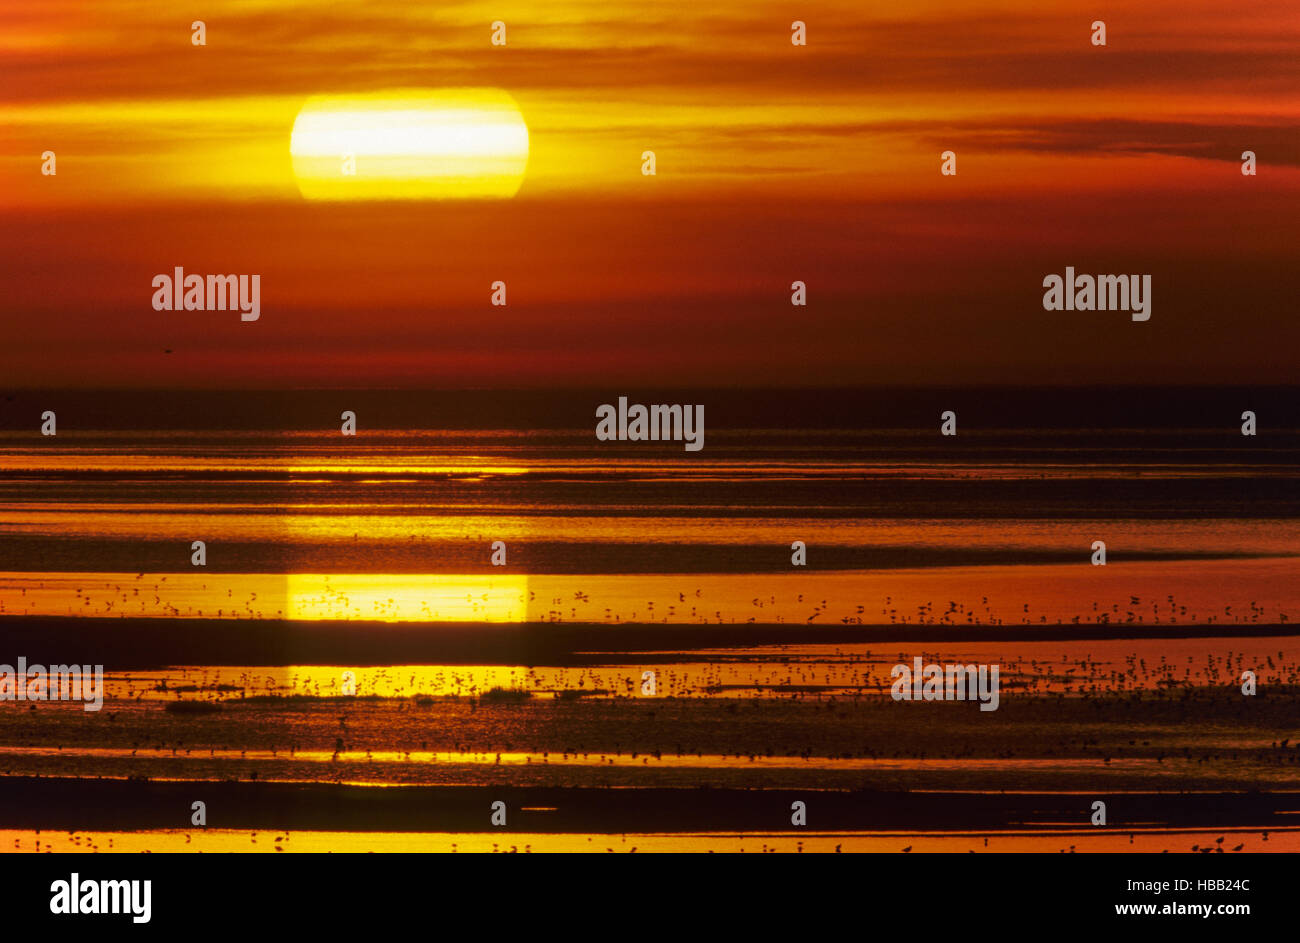 Sunset with shorebirds at North Sea coast Stock Photo